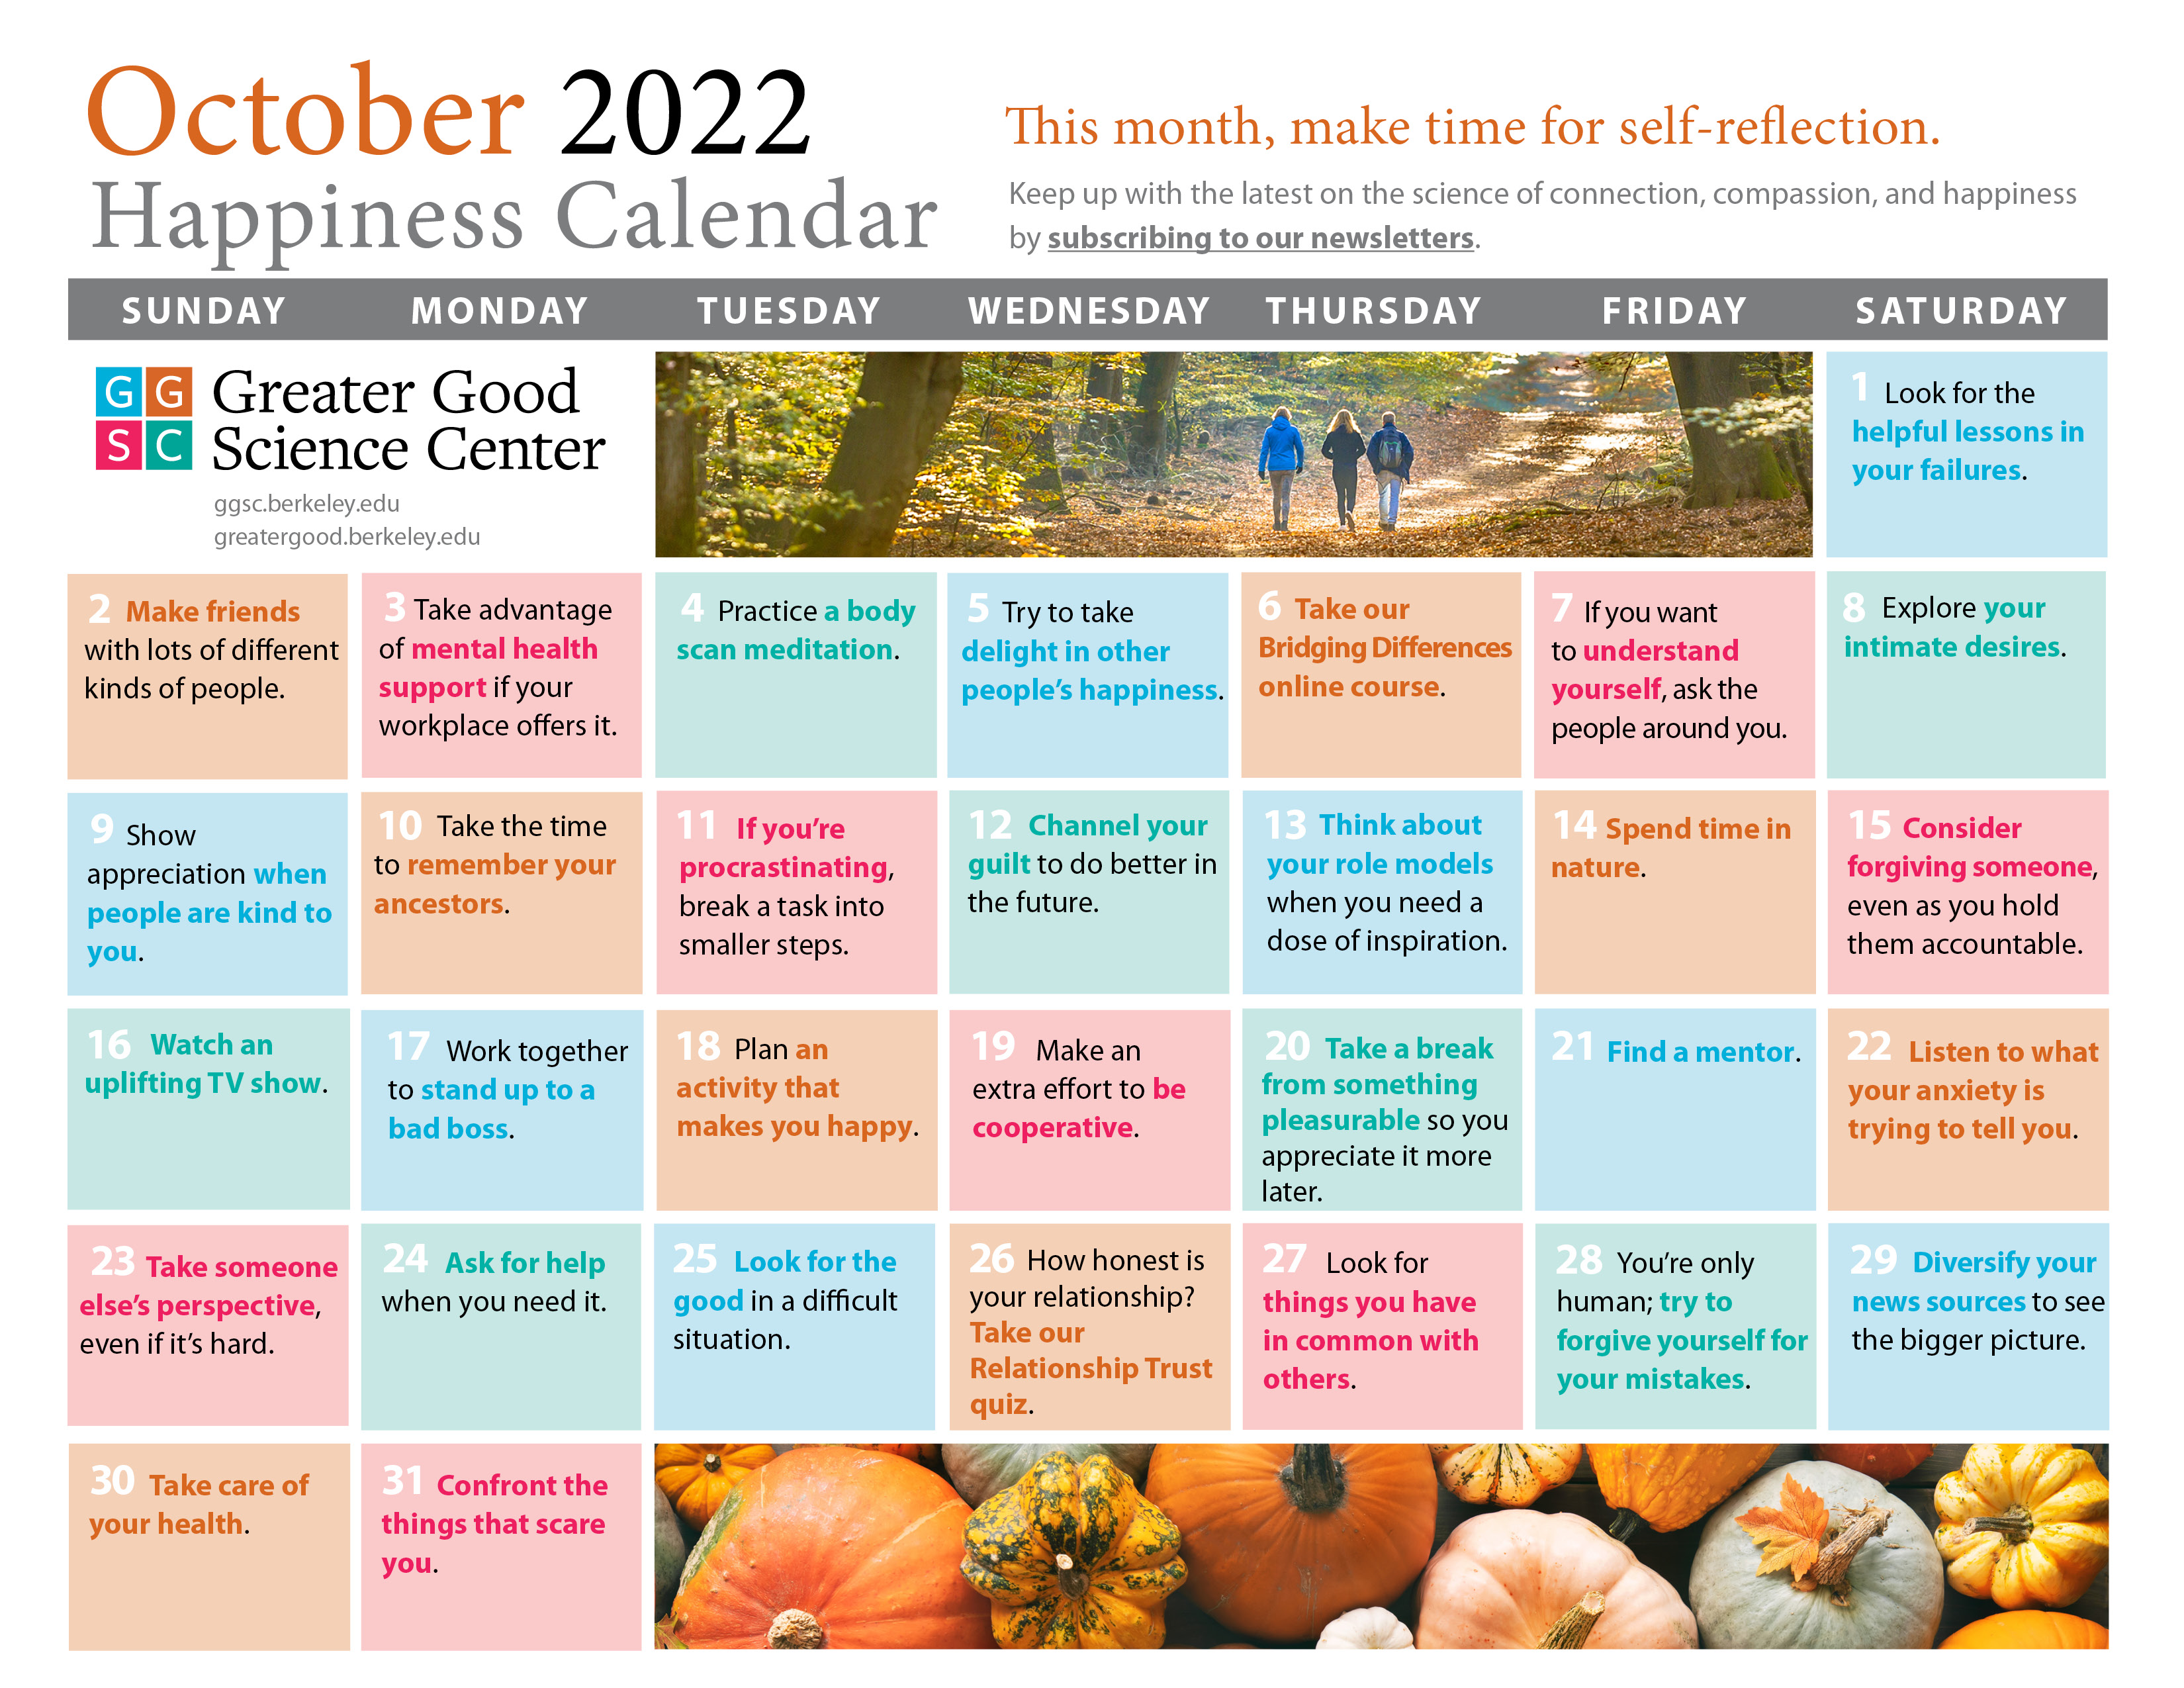 October 2022 happiness calendar